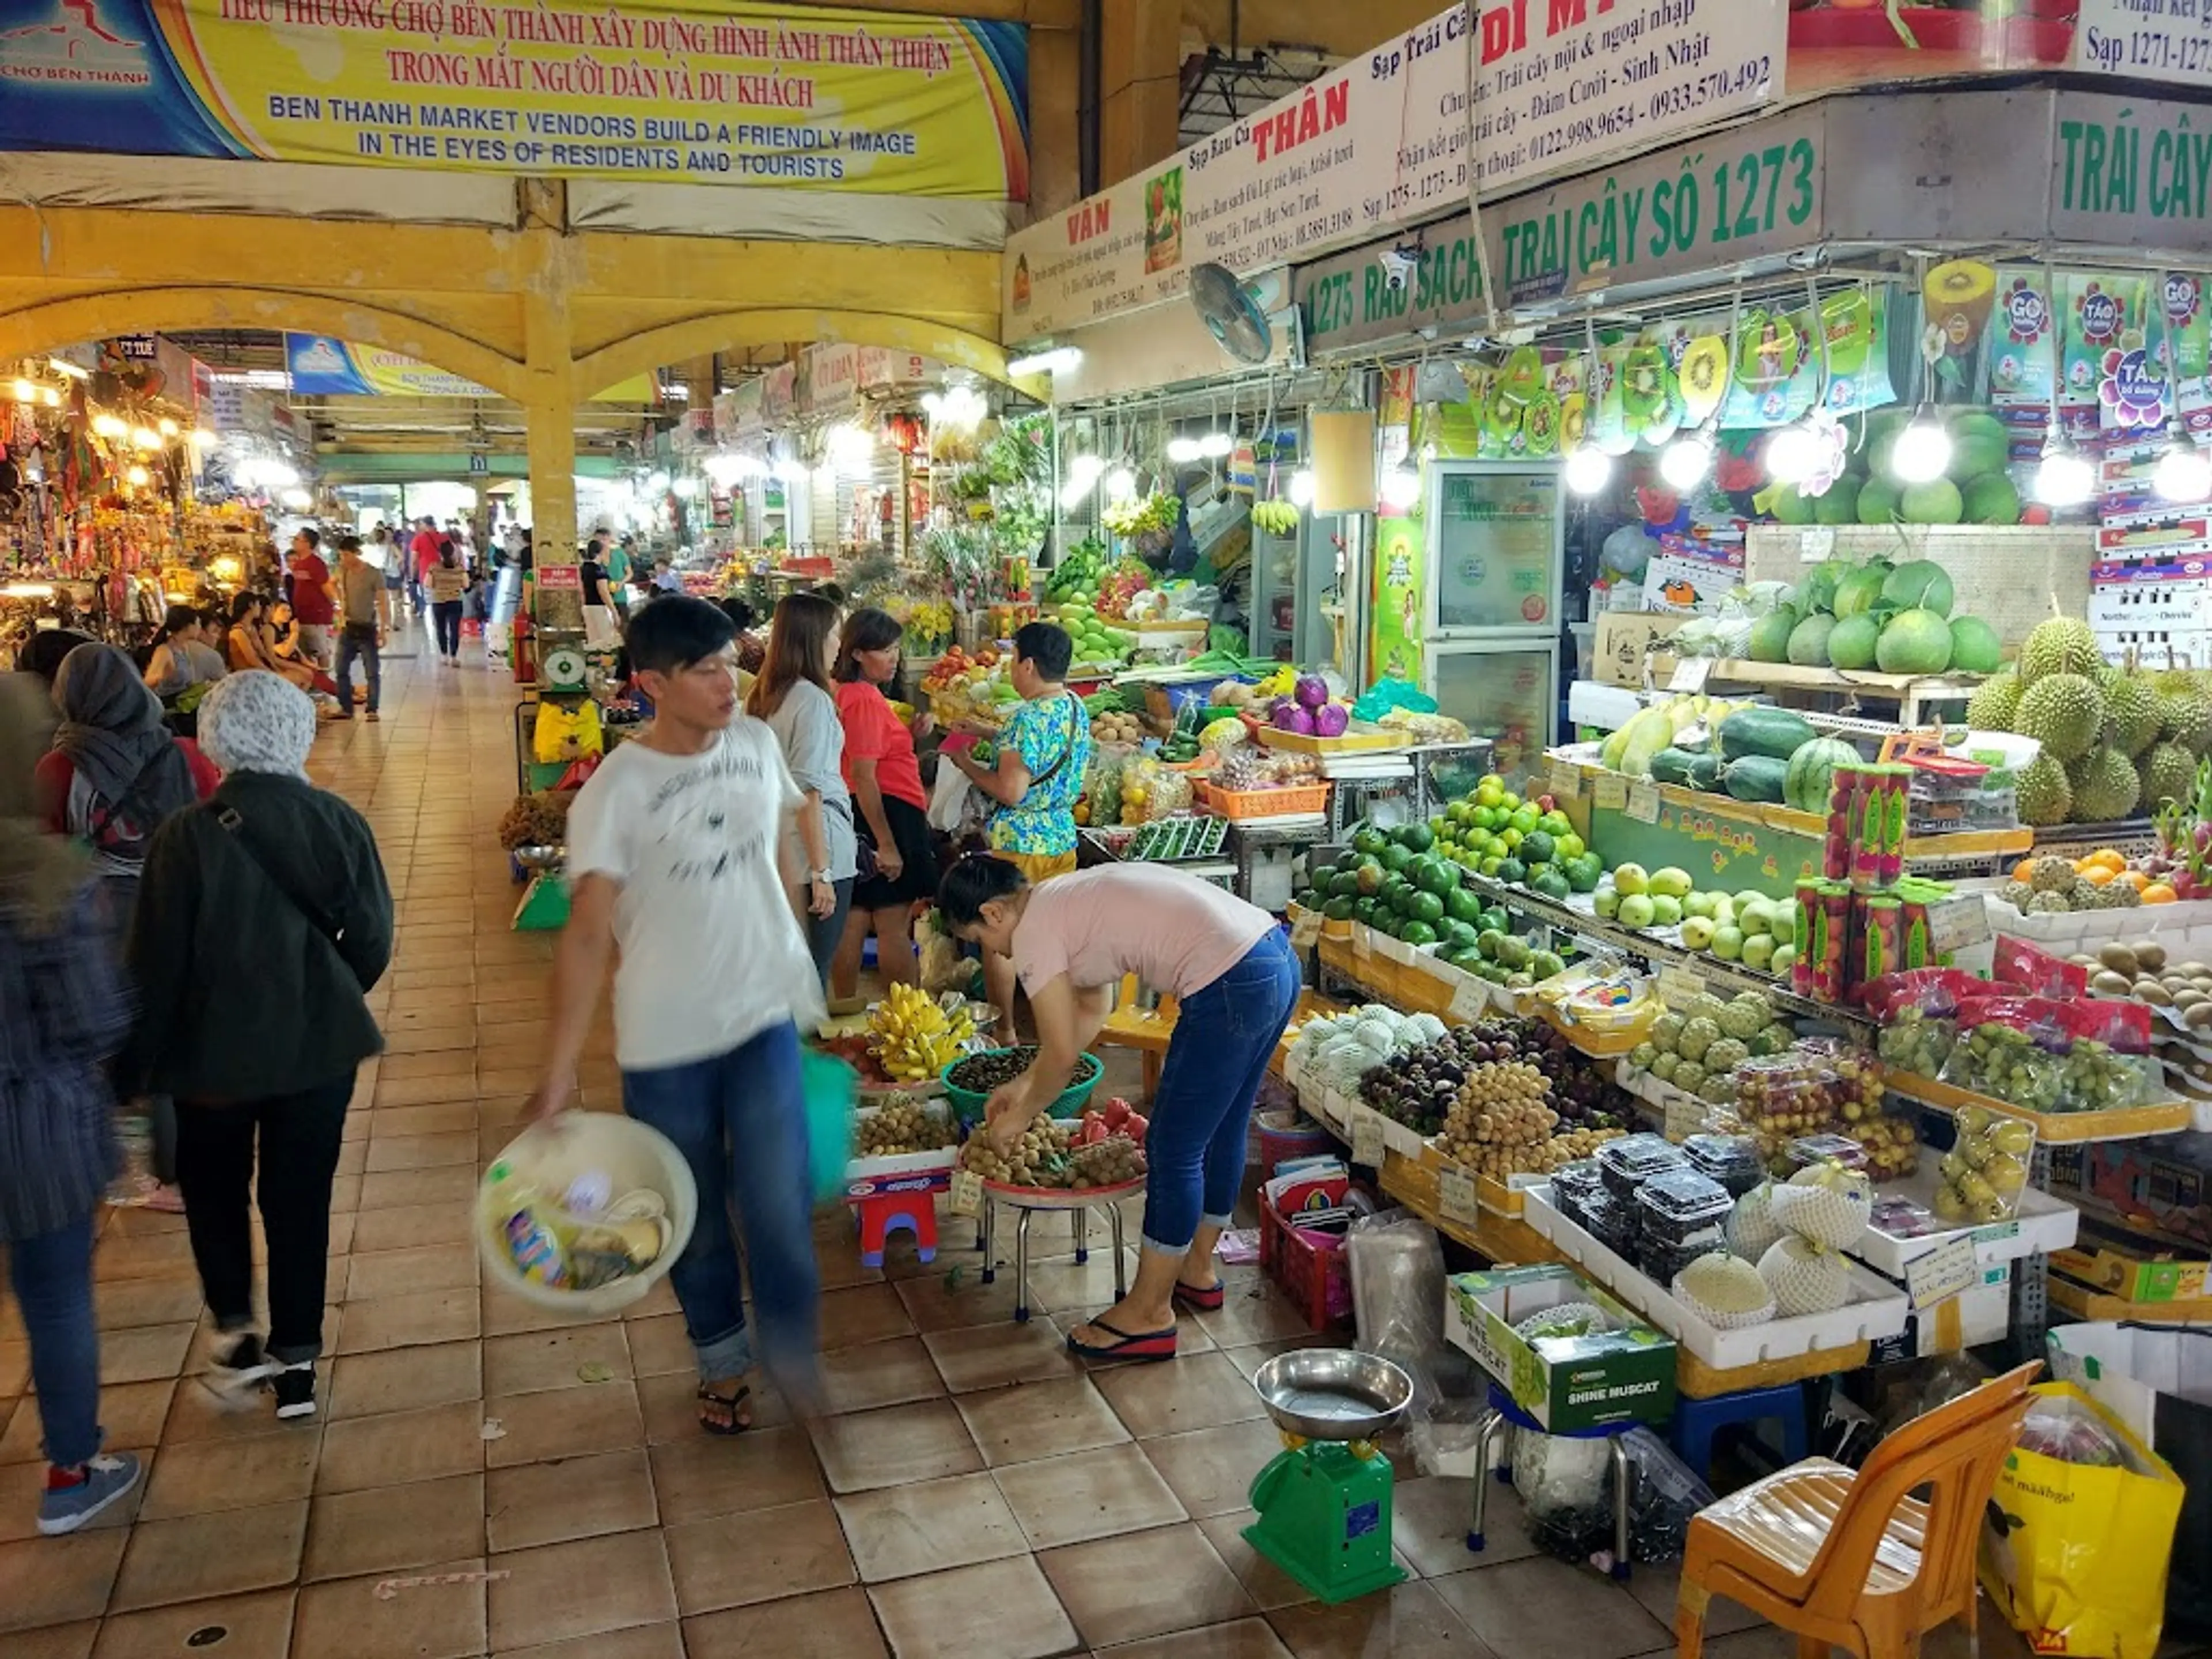 Local Market